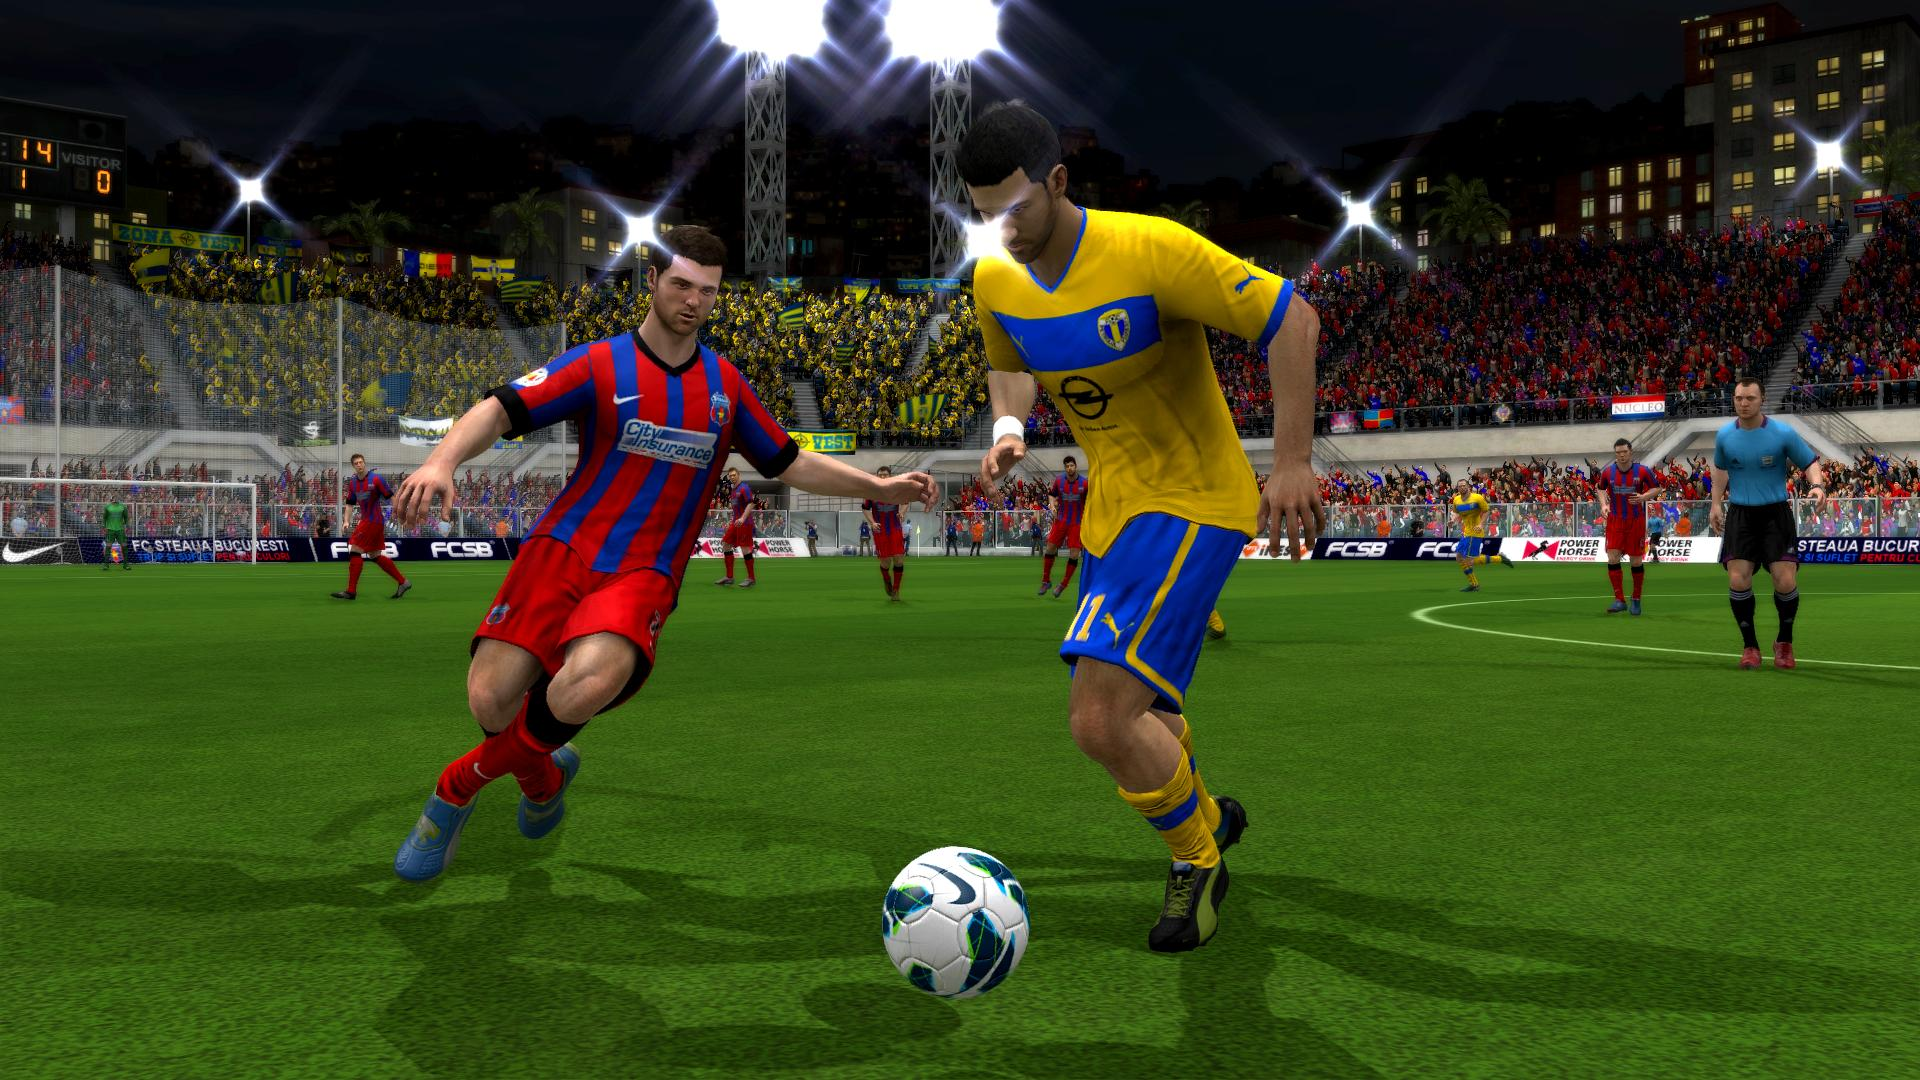 FIFA 14 [Origin/EA app] с гарантией ✅ | offline